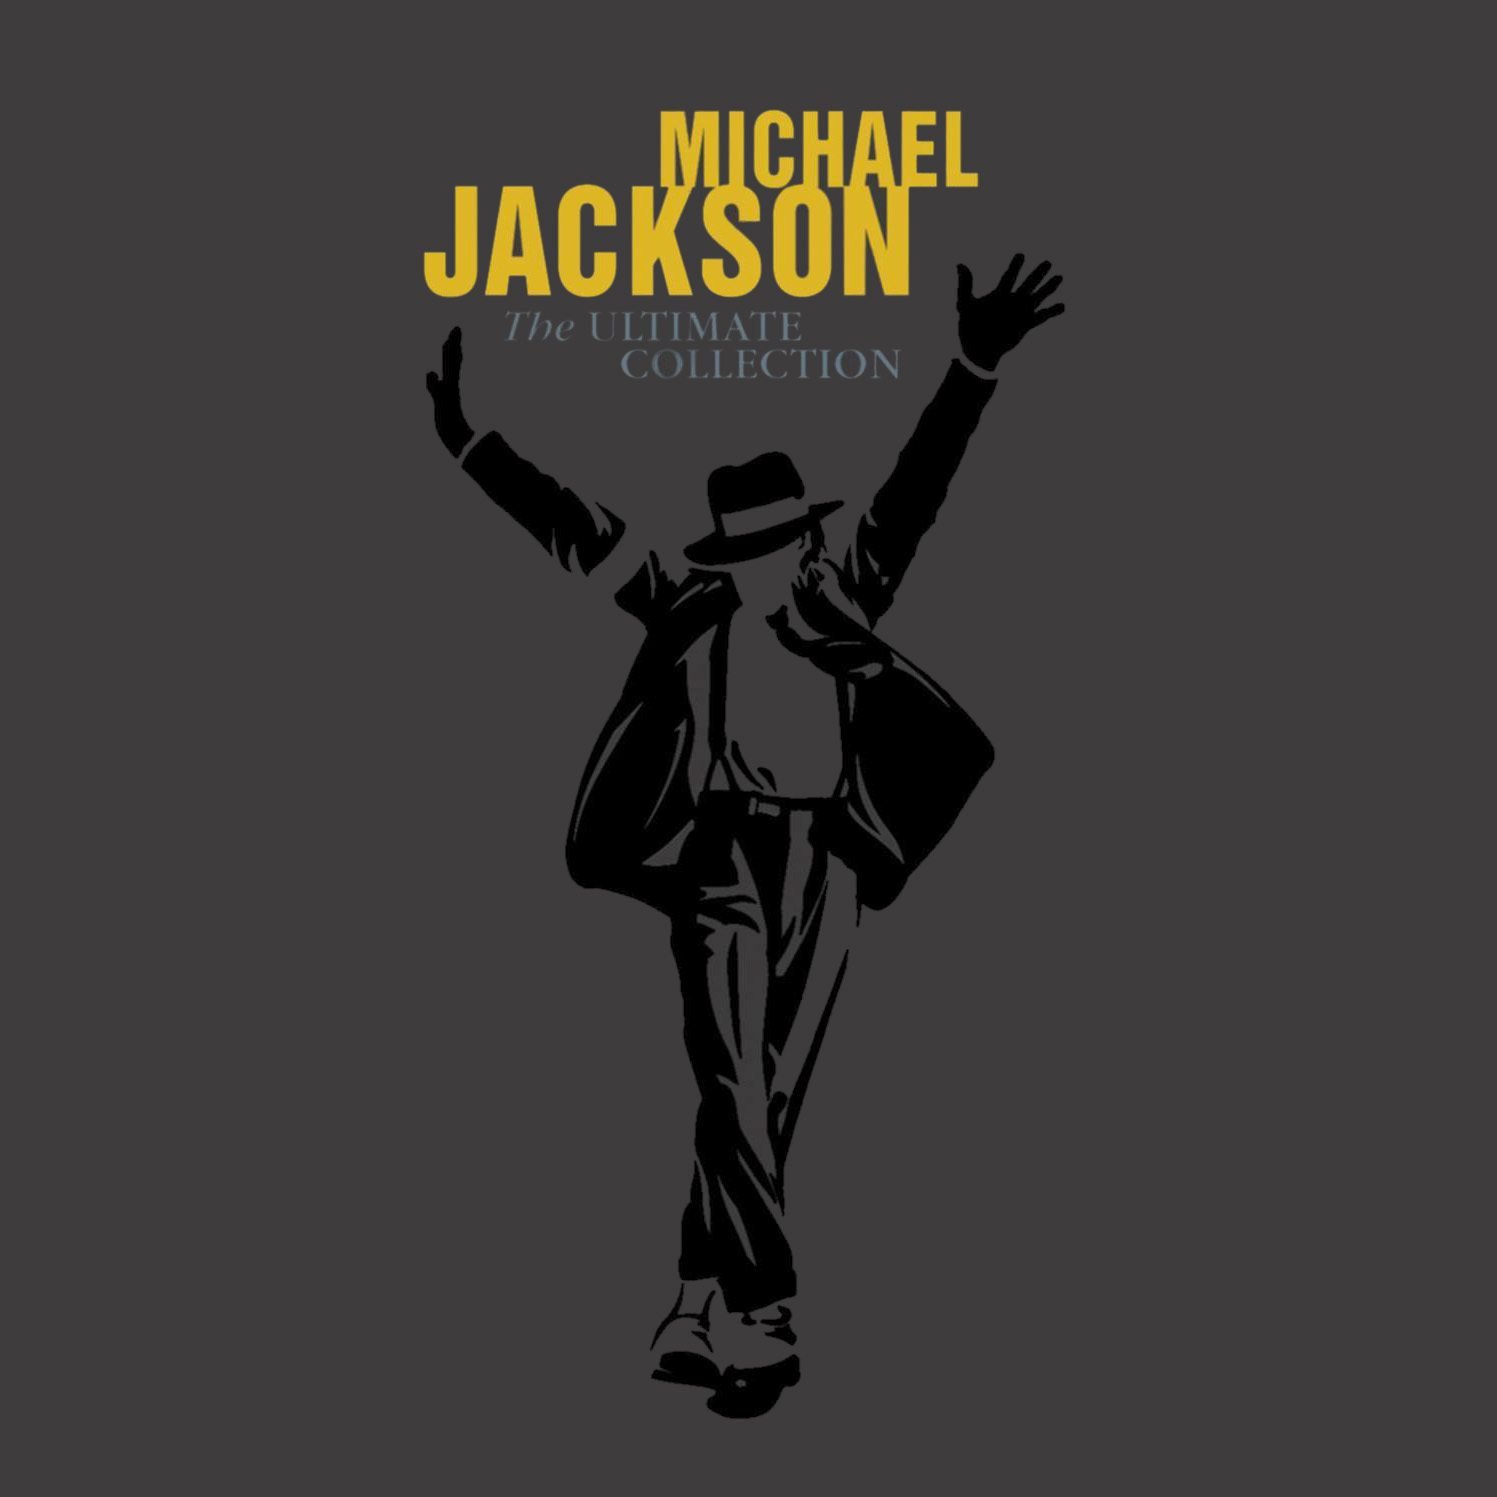 Michael jackson albums. Michael Jackson обложка. Michael Jackson обложки альбомов.